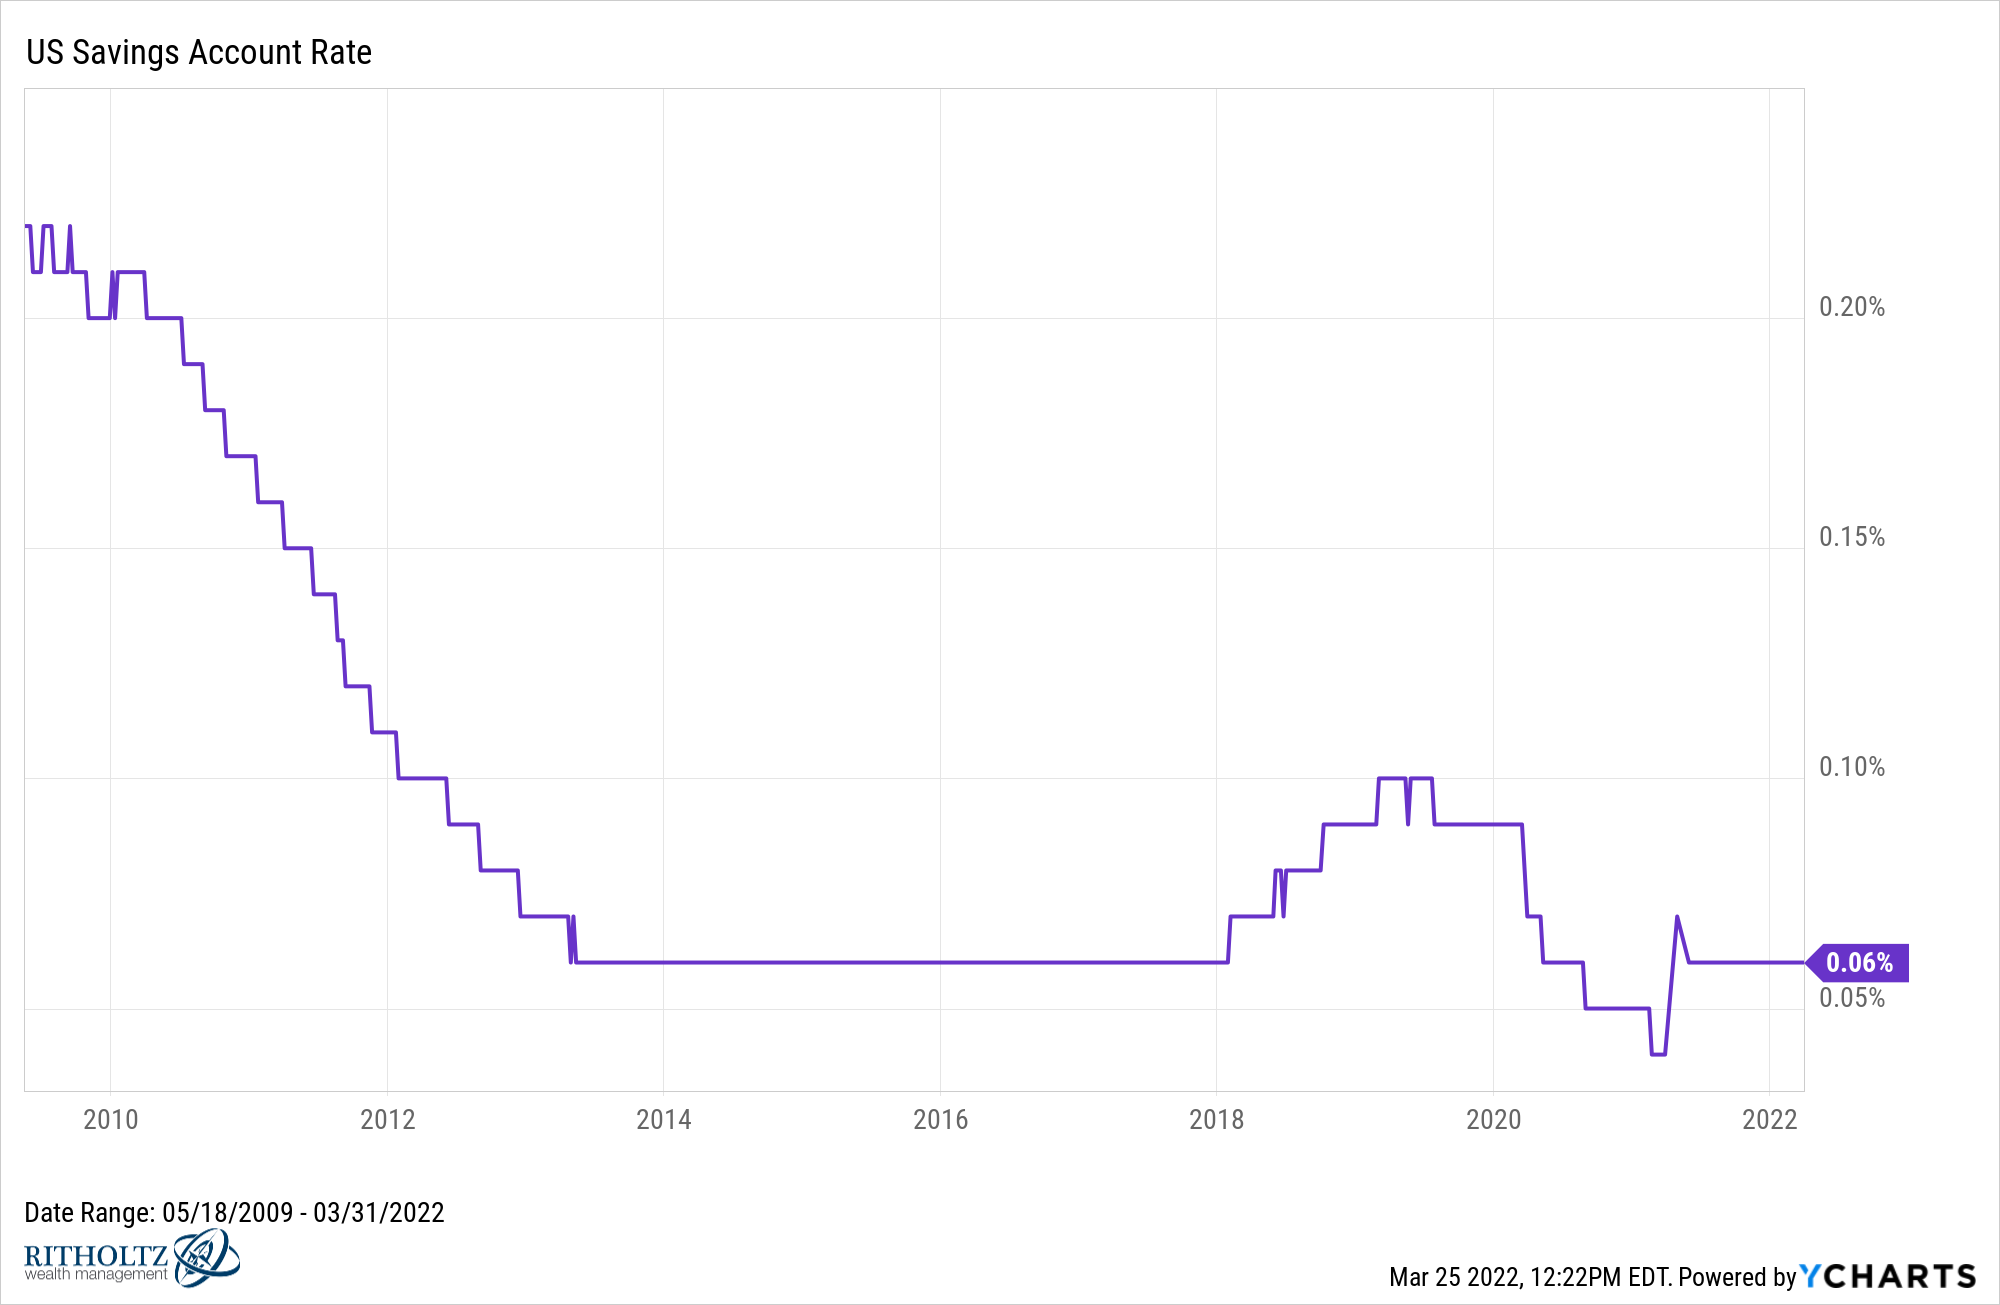 US Savings Account Rate since 2010